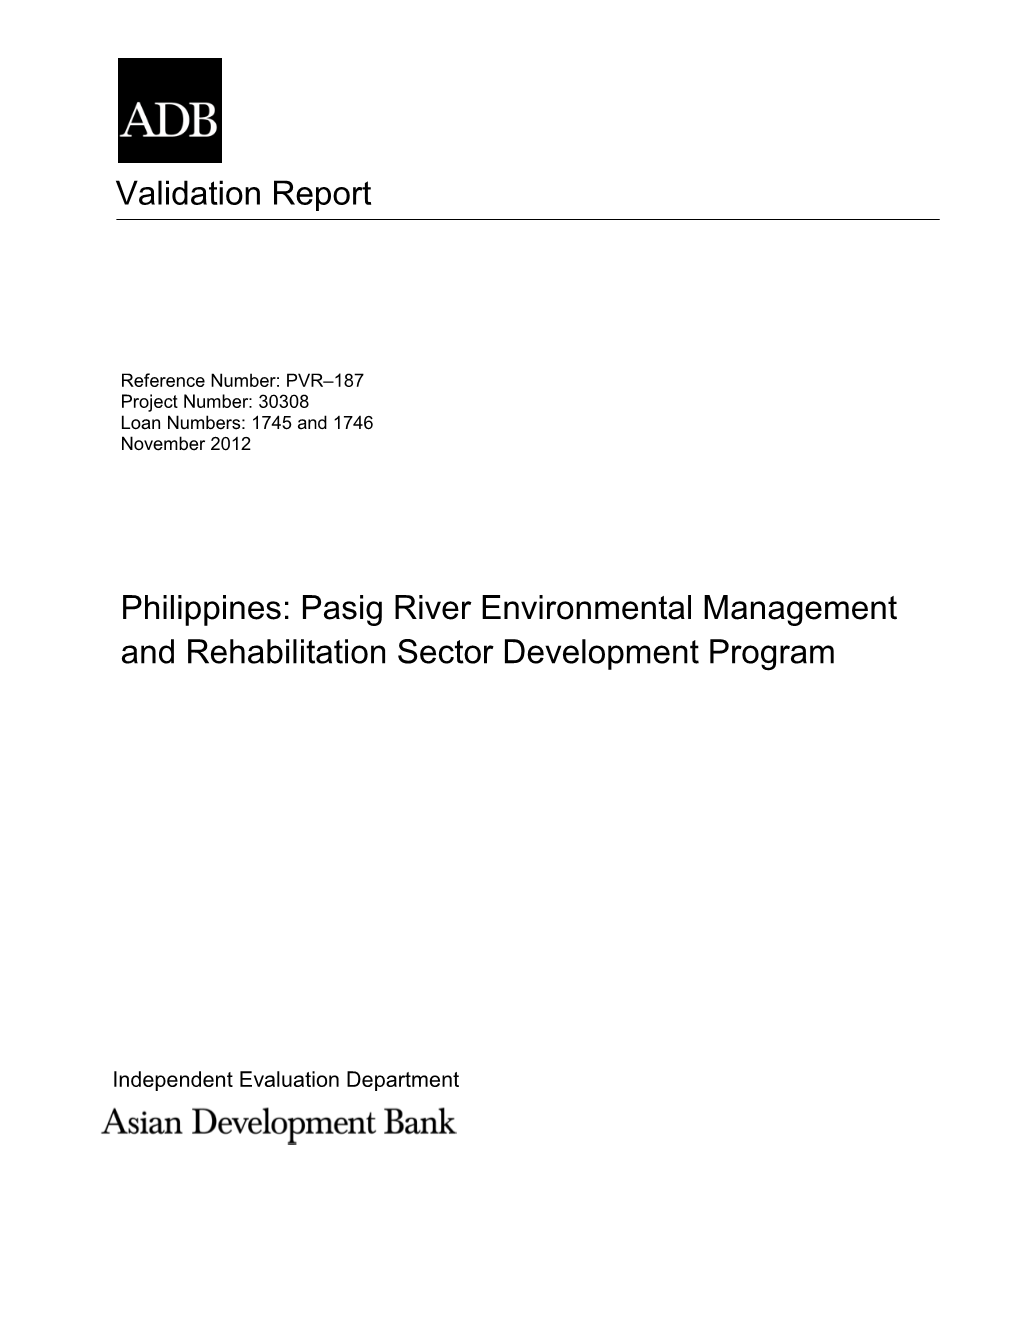 Philippines: Pasig River Environmental Management and Rehabilitation Sector Development Program